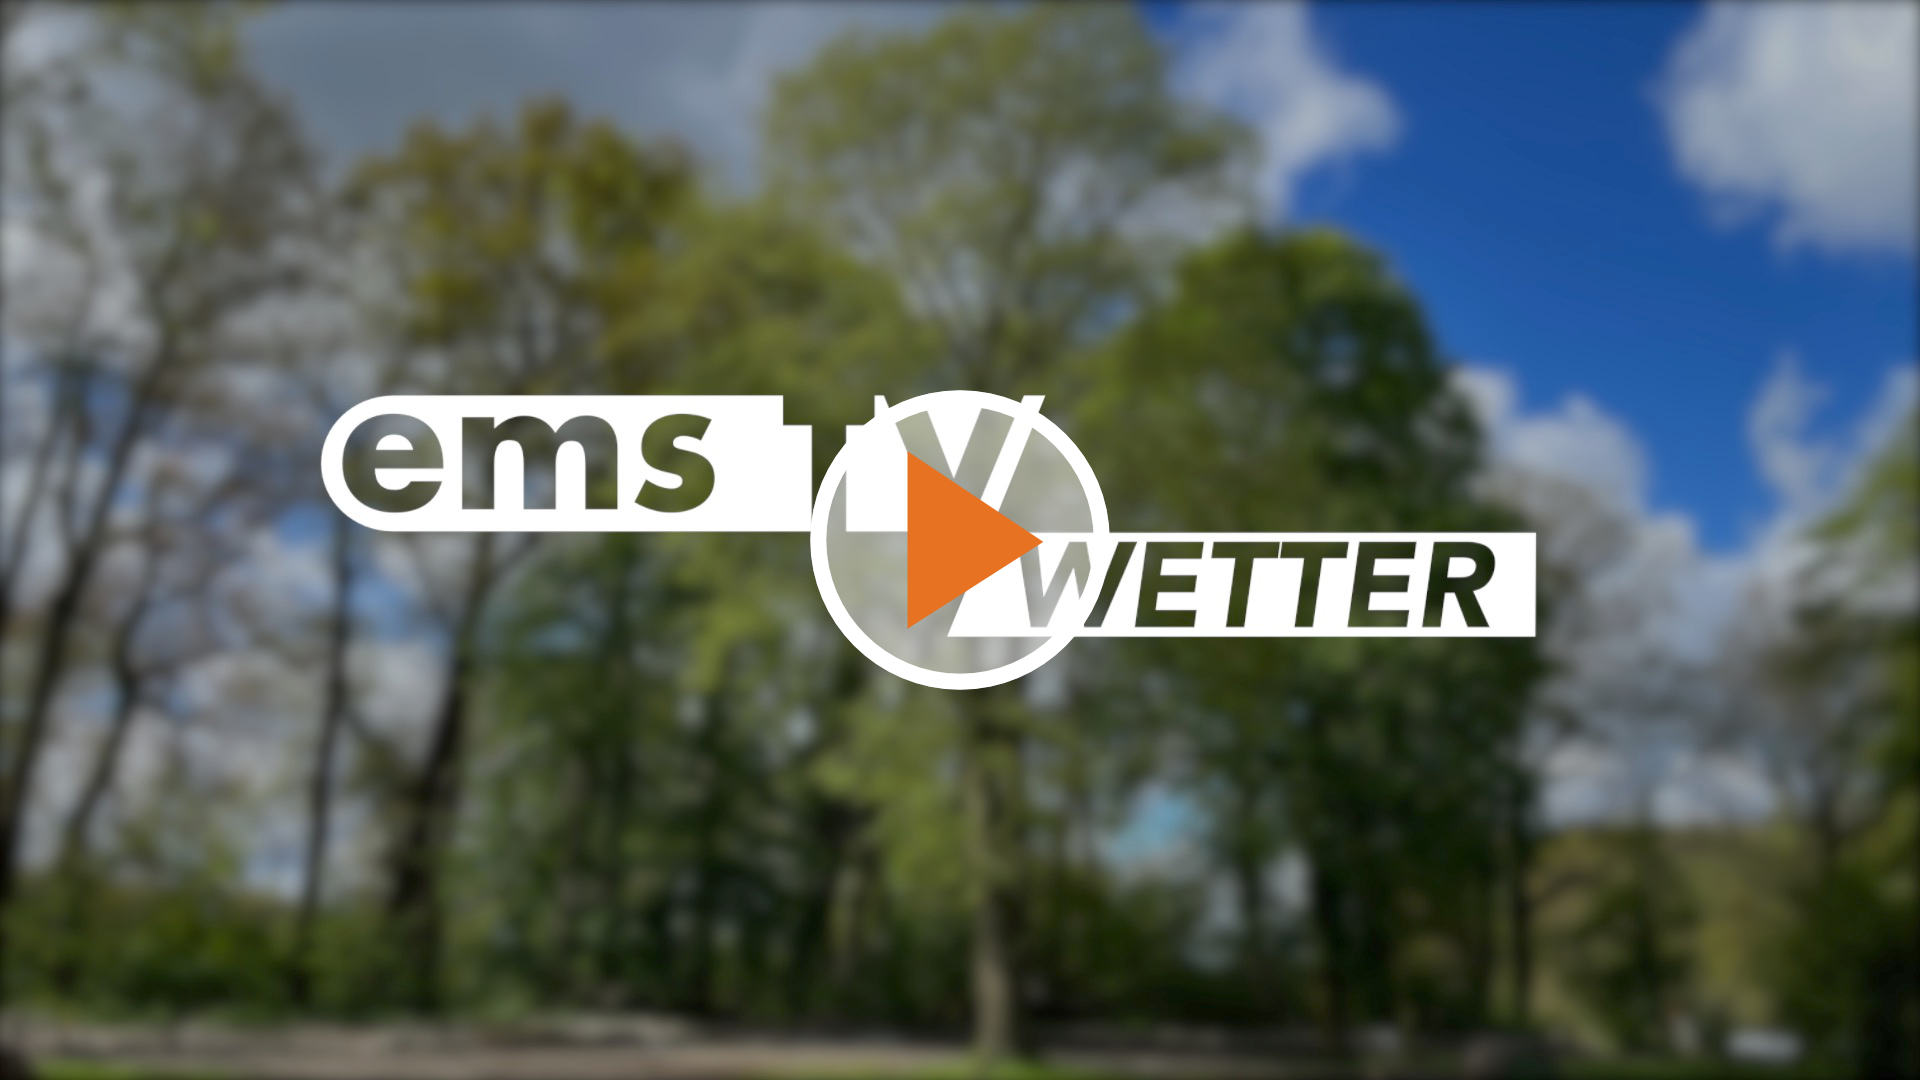 Screen_ems-TV-Wetter_April